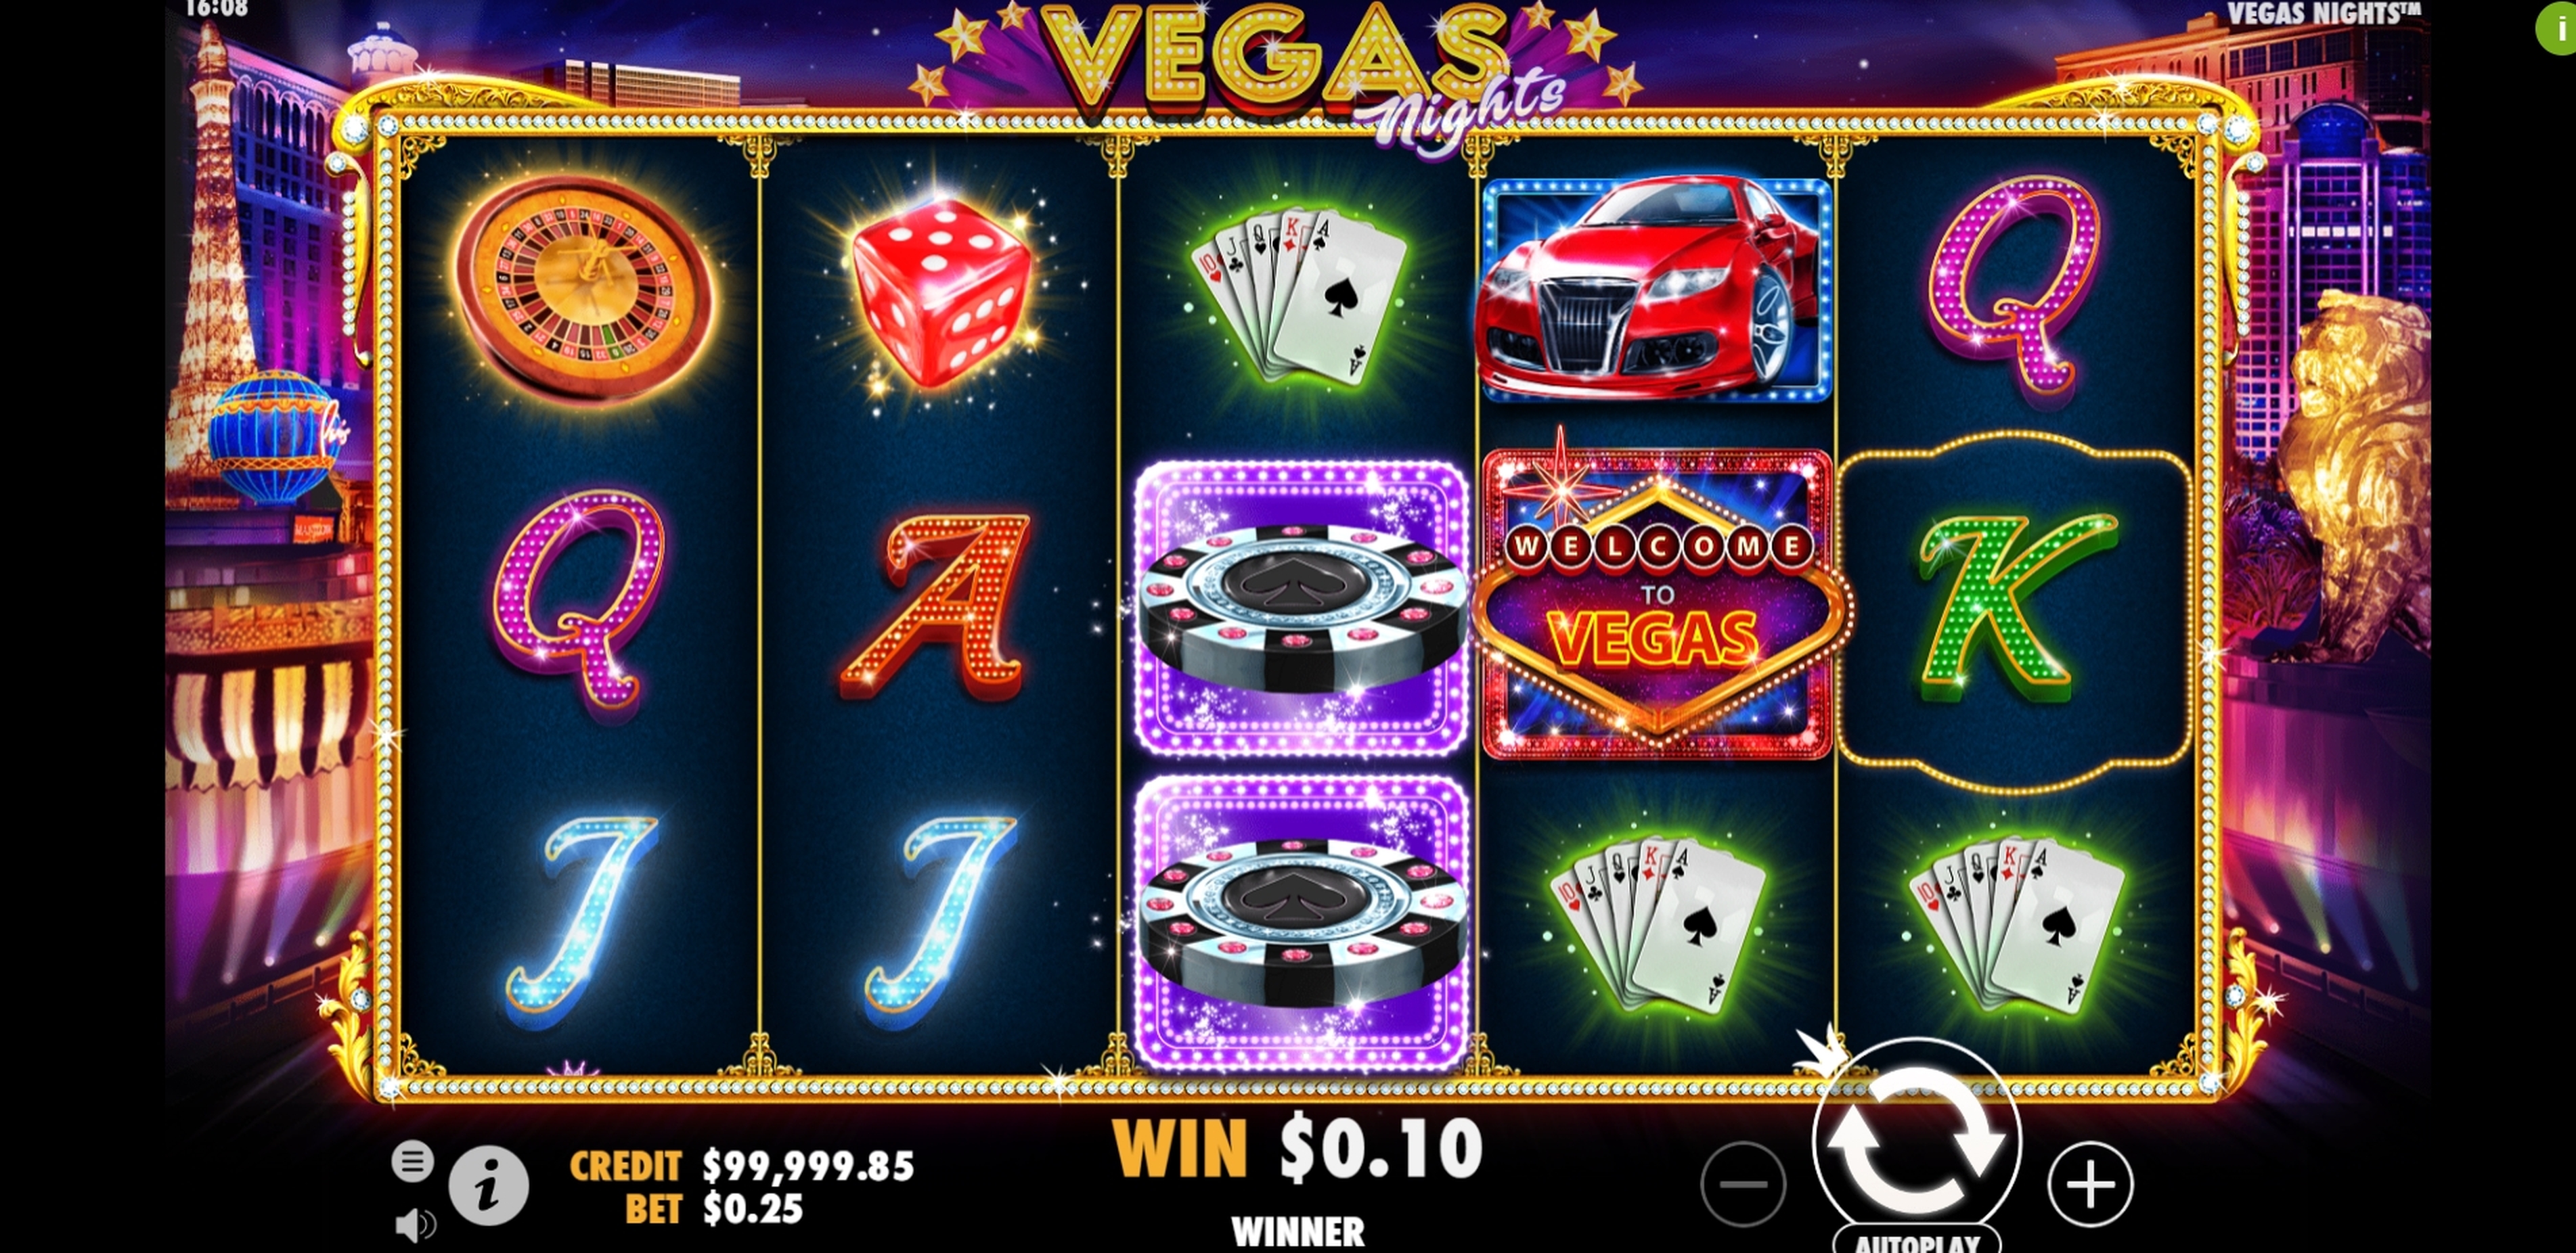 Win Money in Vegas Nights Free Slot Game by Pragmatic Play